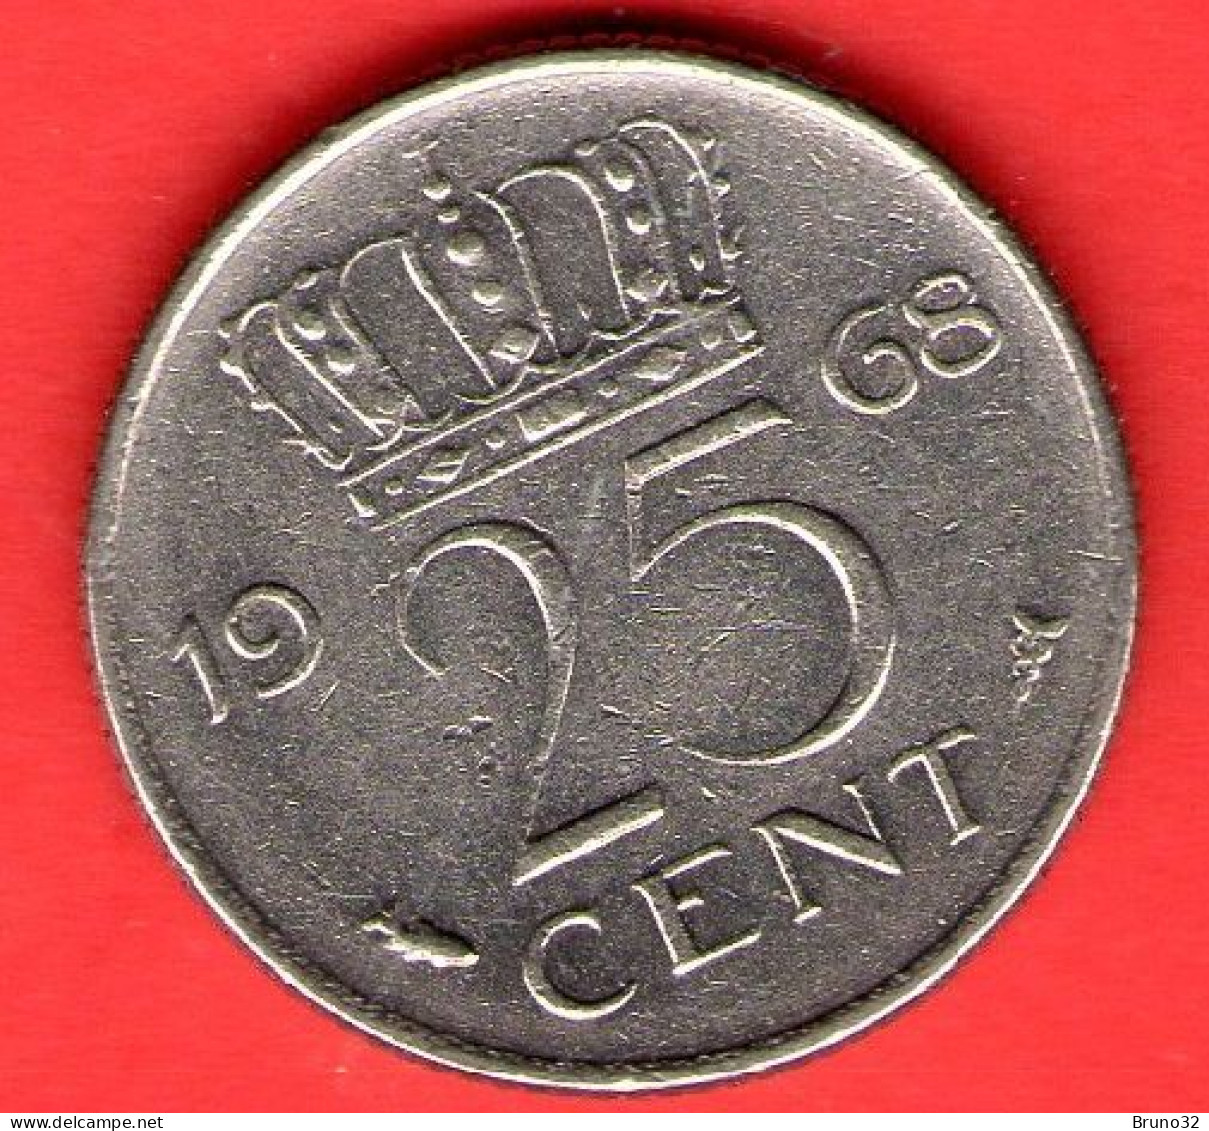 Paesi Bassi - Nederland - Pays Bas - 1968 - 25 Cents - SPL/XF - Come Da Foto - 1948-1980 : Juliana